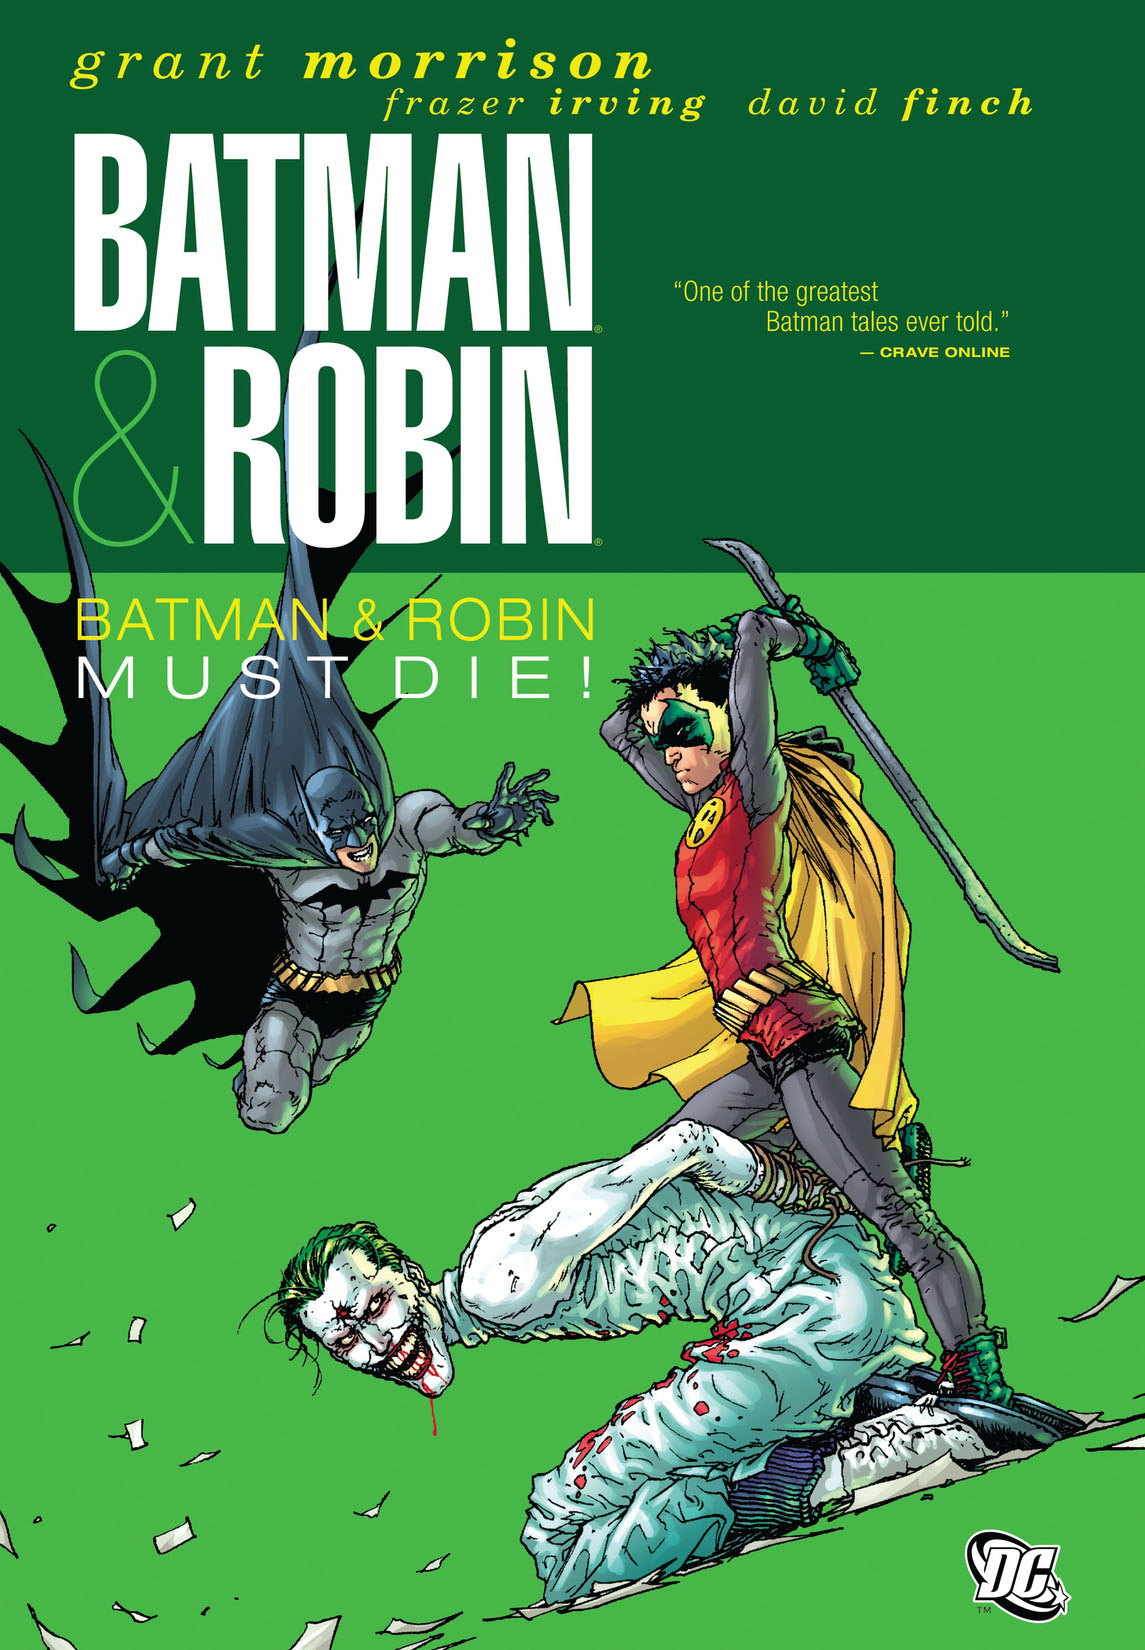 Batman & Robin Vol. 3: Batman & Robin Must Die! preview images